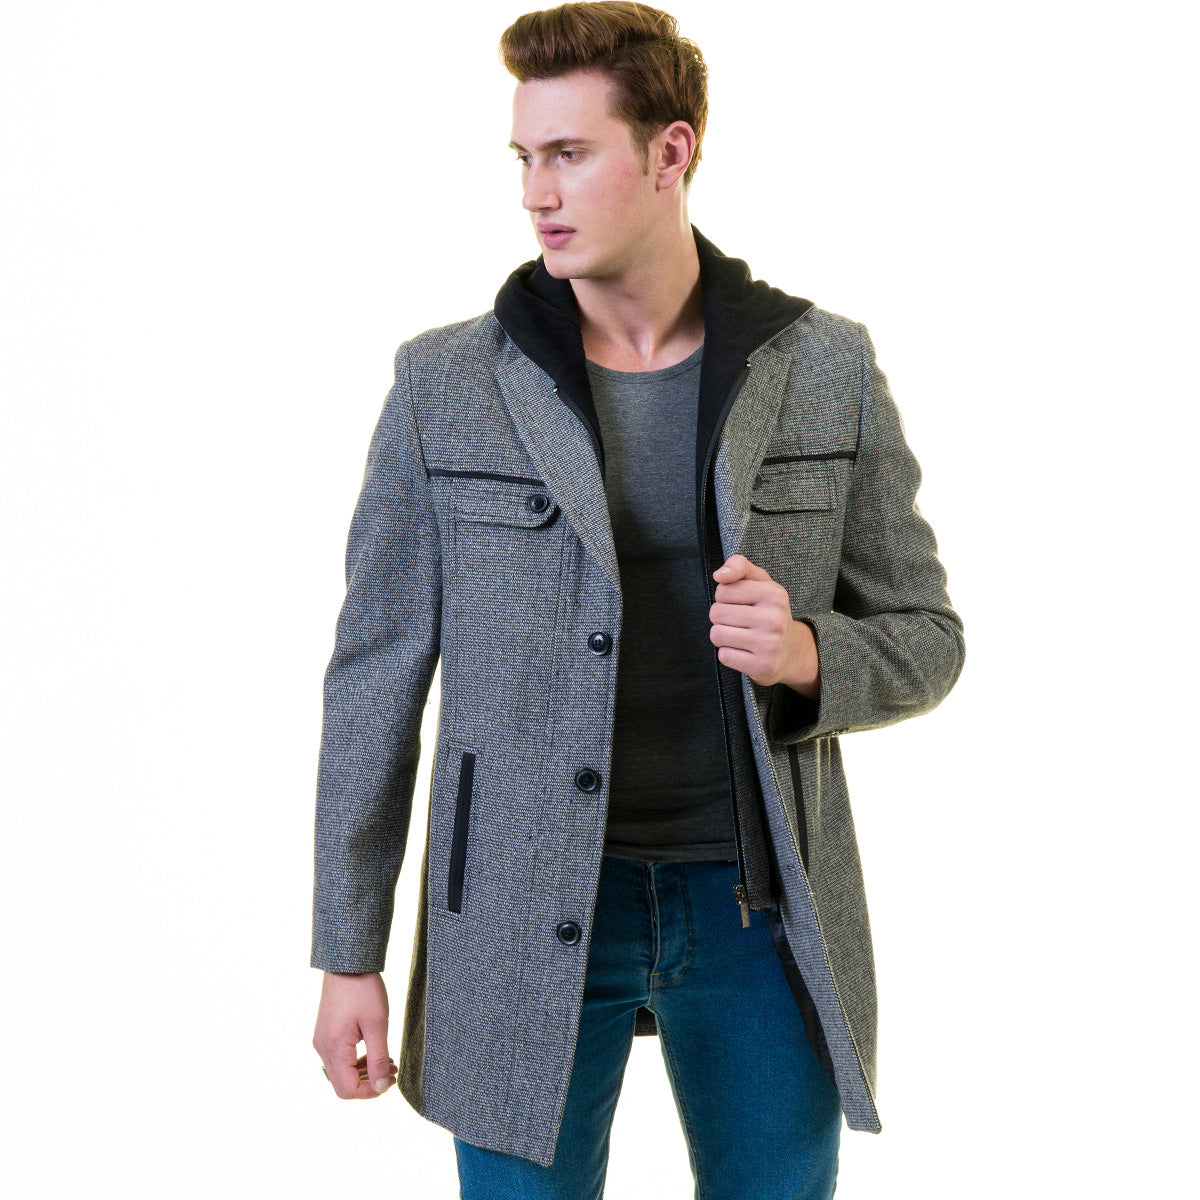 Men's European Grey Wool Coat Hooded Jacket Tailor fit Luxury Quality